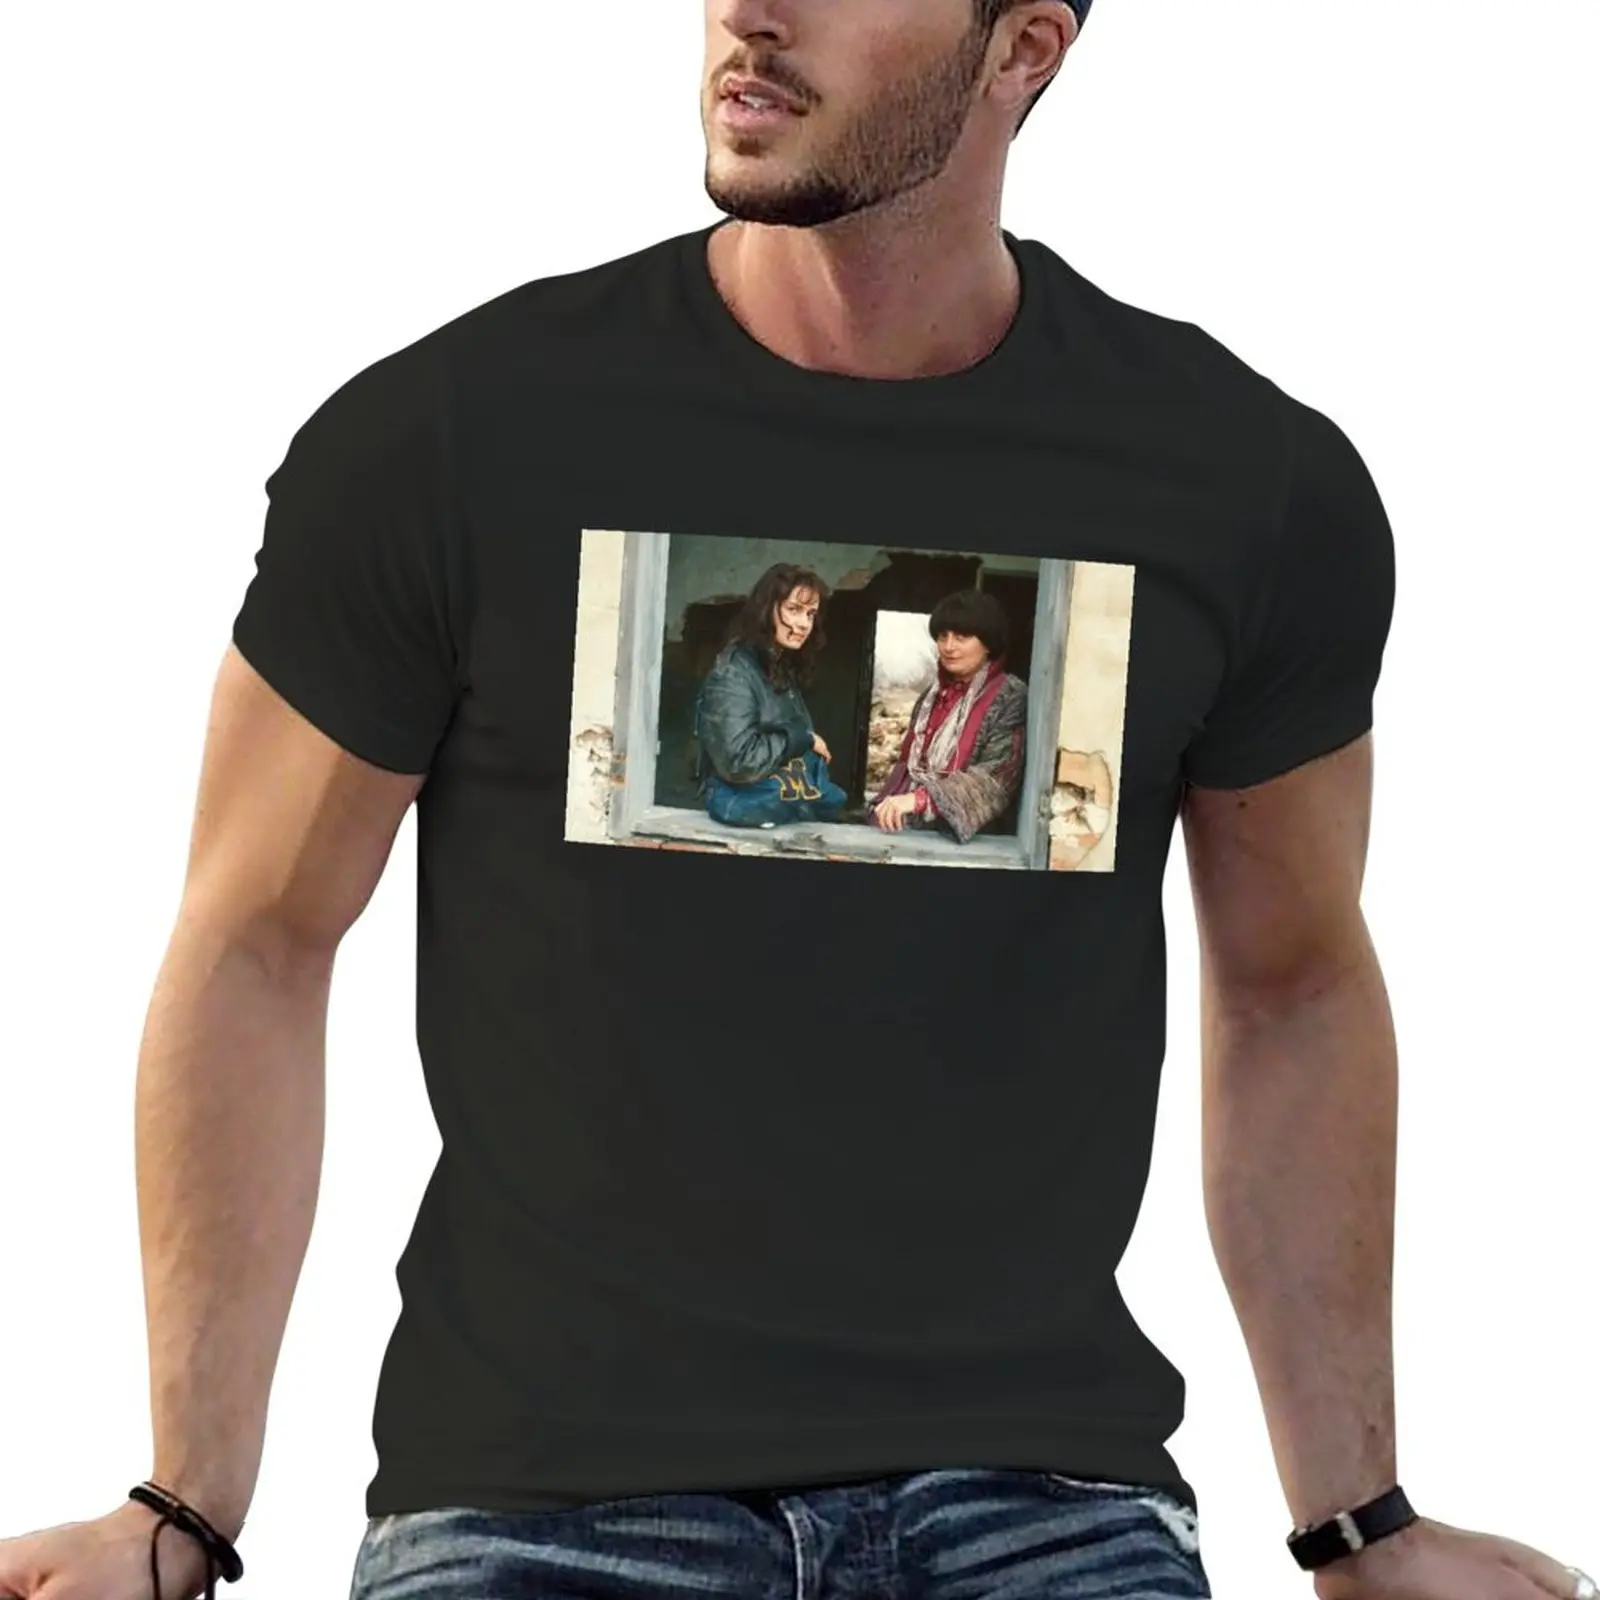 

New Vagabond Agnes Varda vintage T-Shirt animal print shirt for boys customized t shirts men graphic t shirts